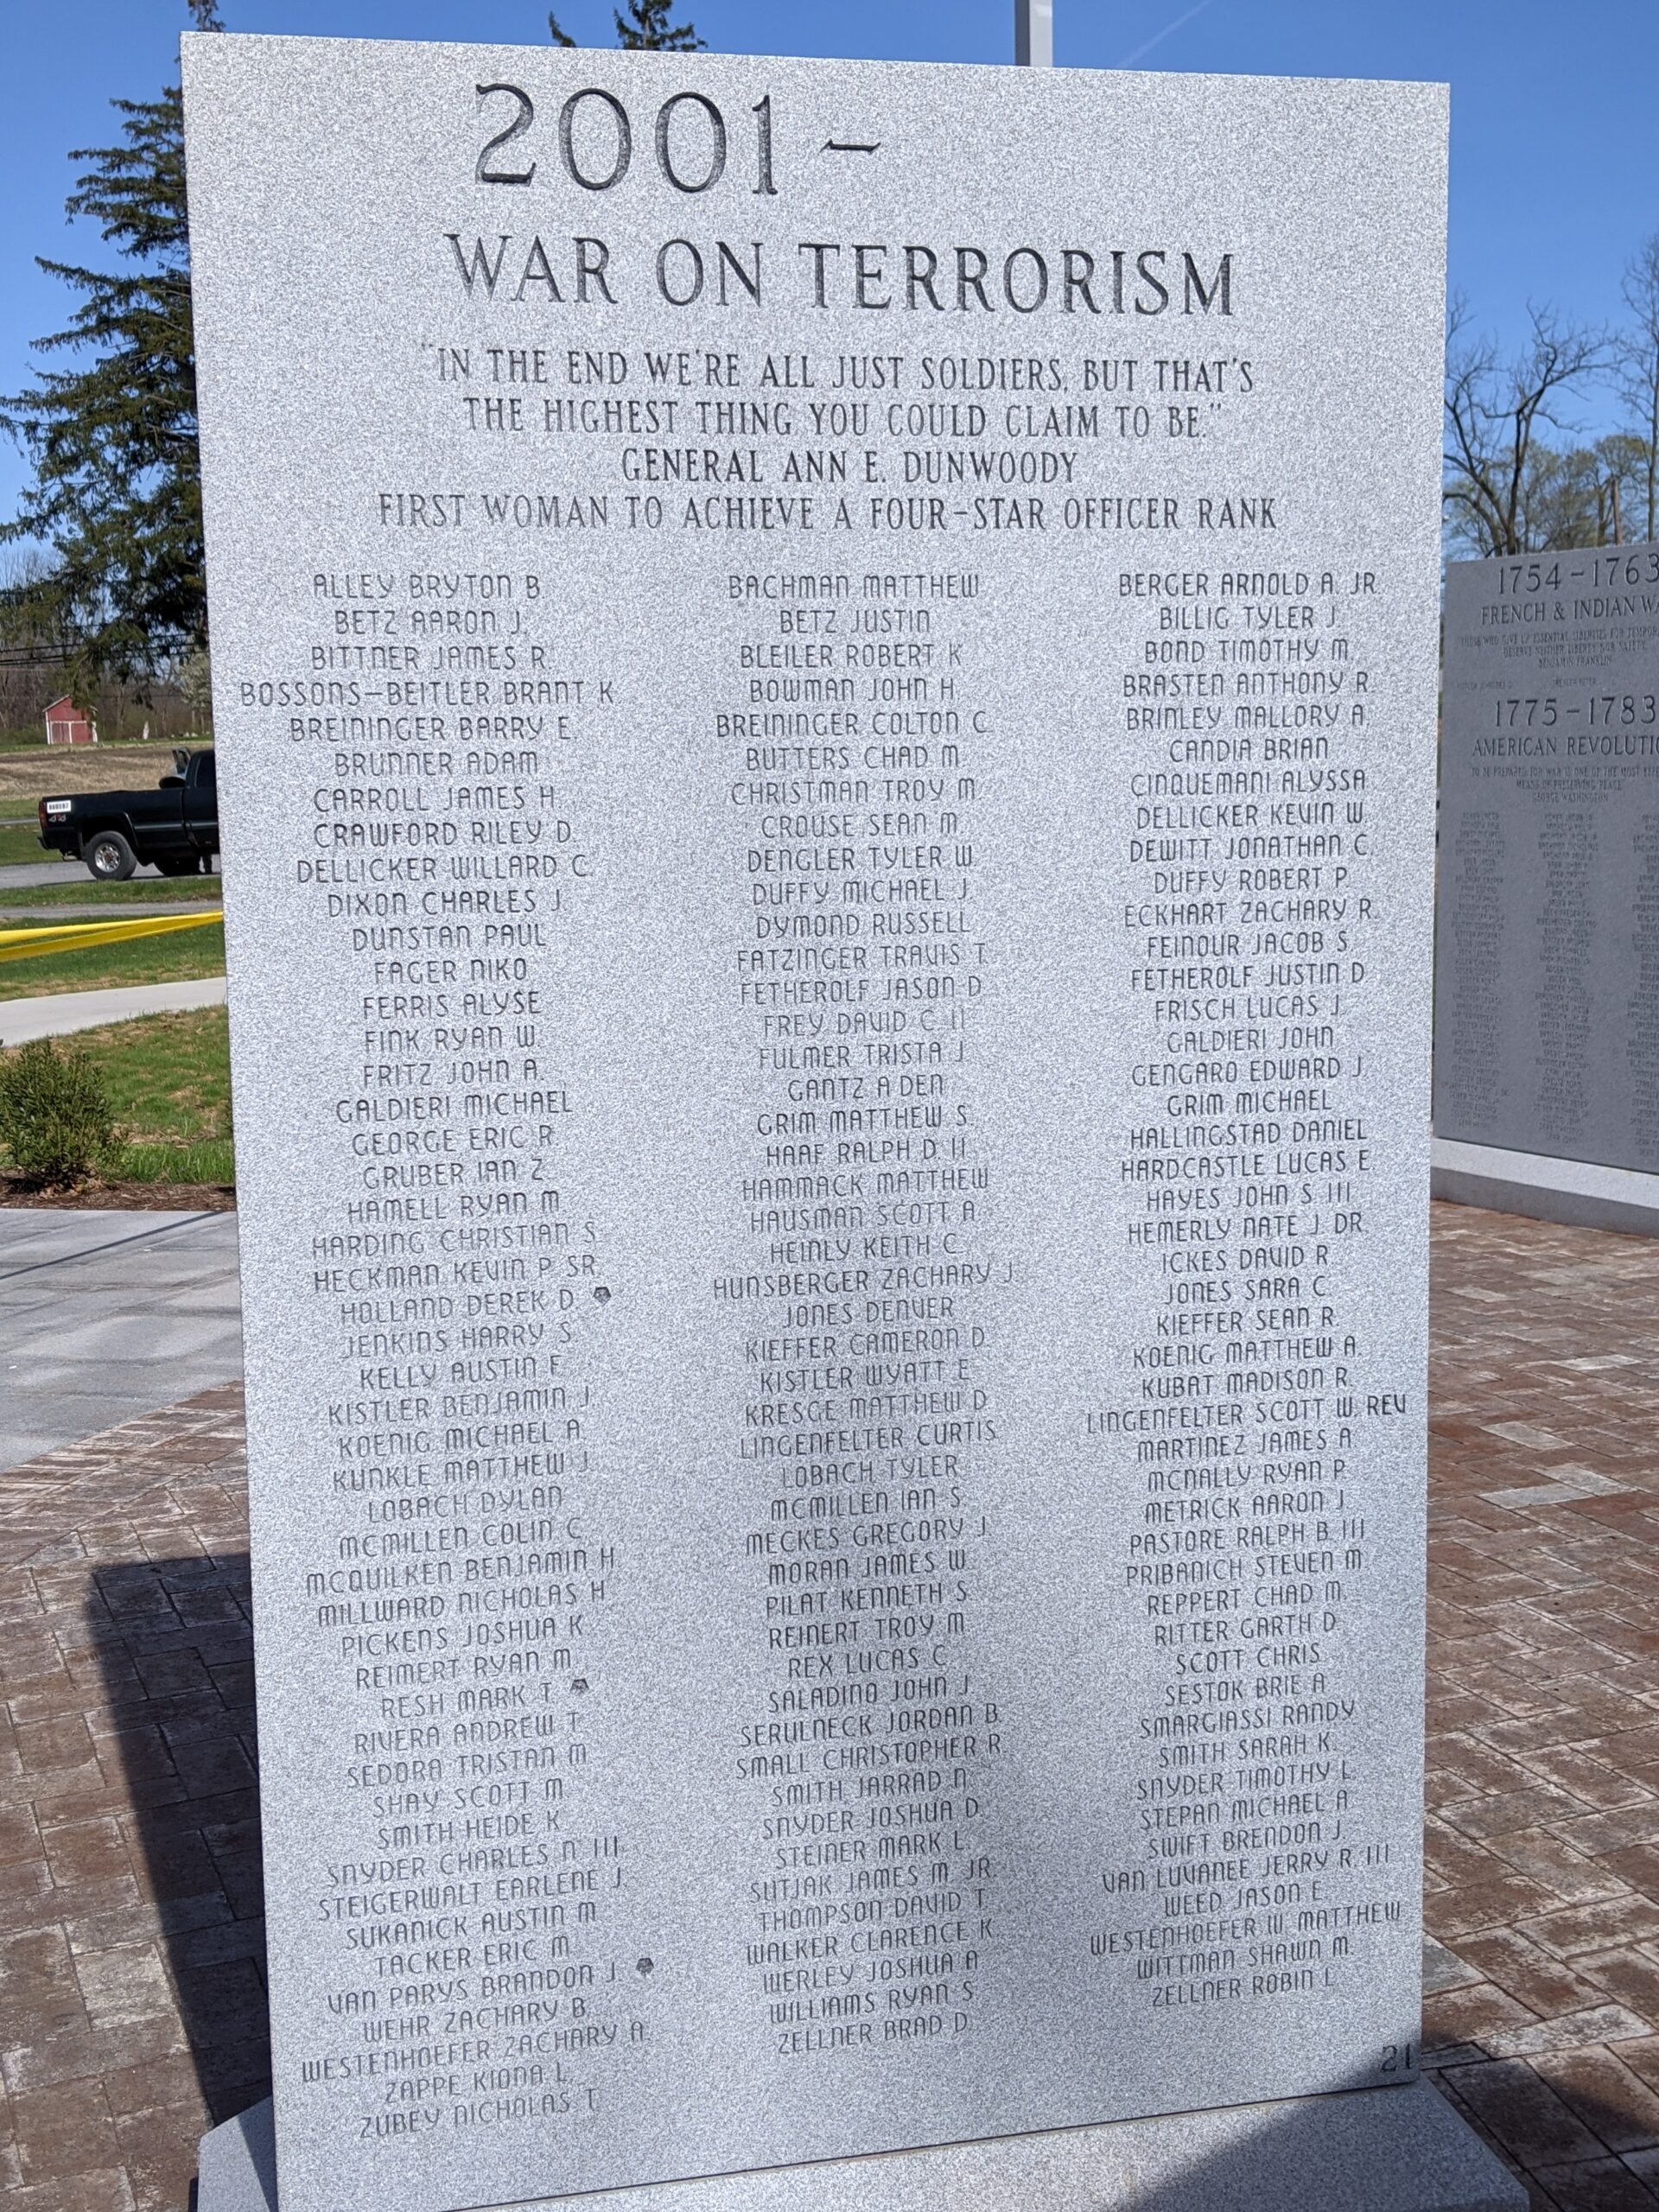 The 2001 War on Terrorism plaque